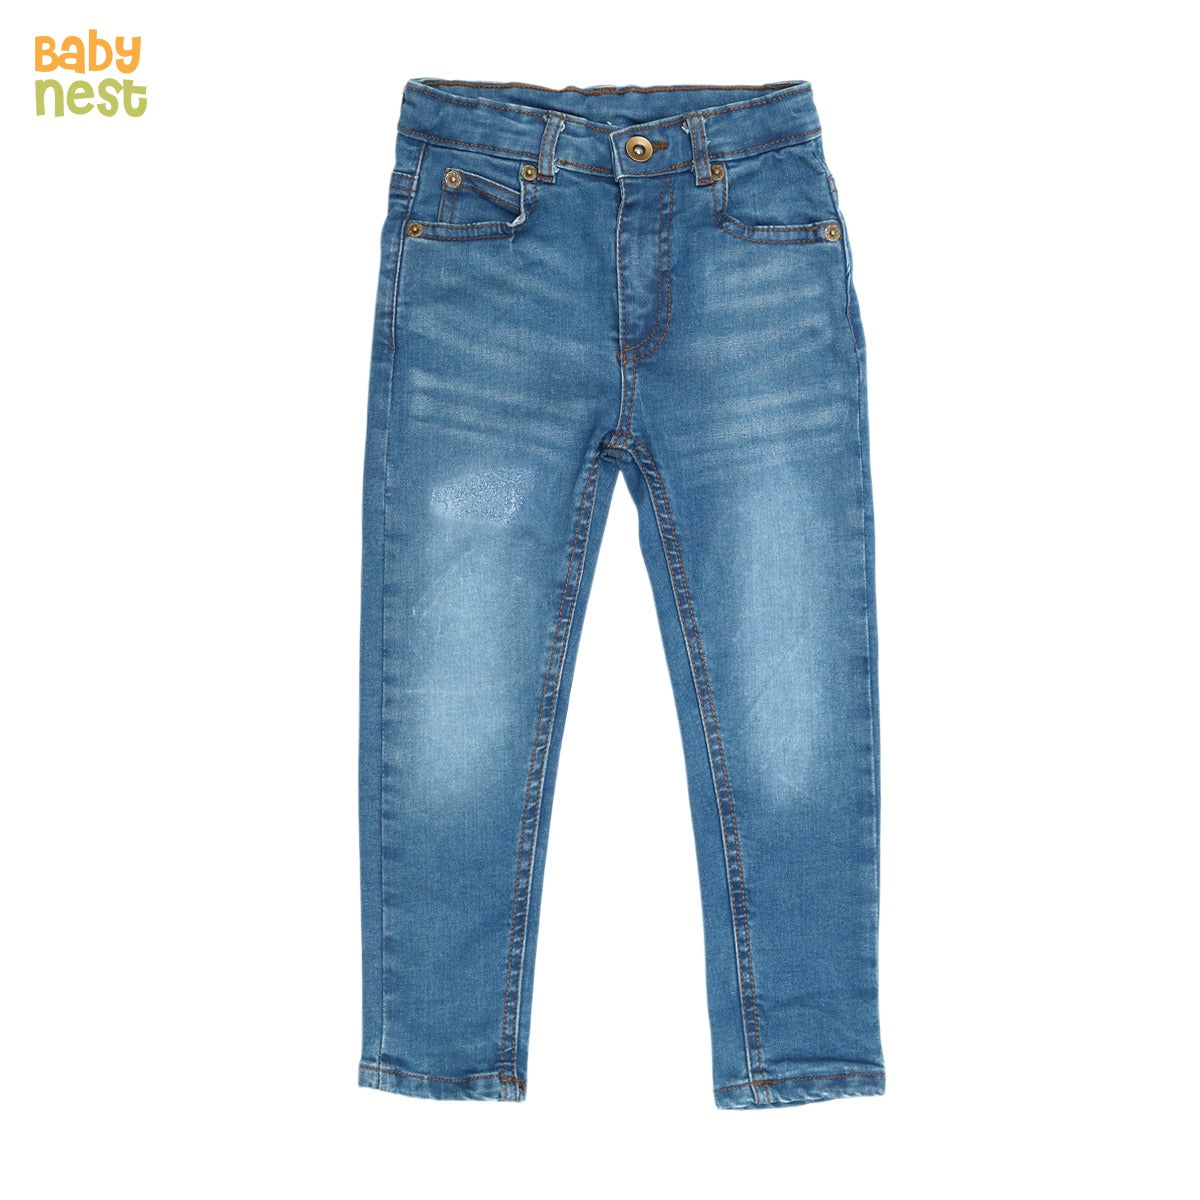 Denim Jeans for Kids - BNBDJ - 13